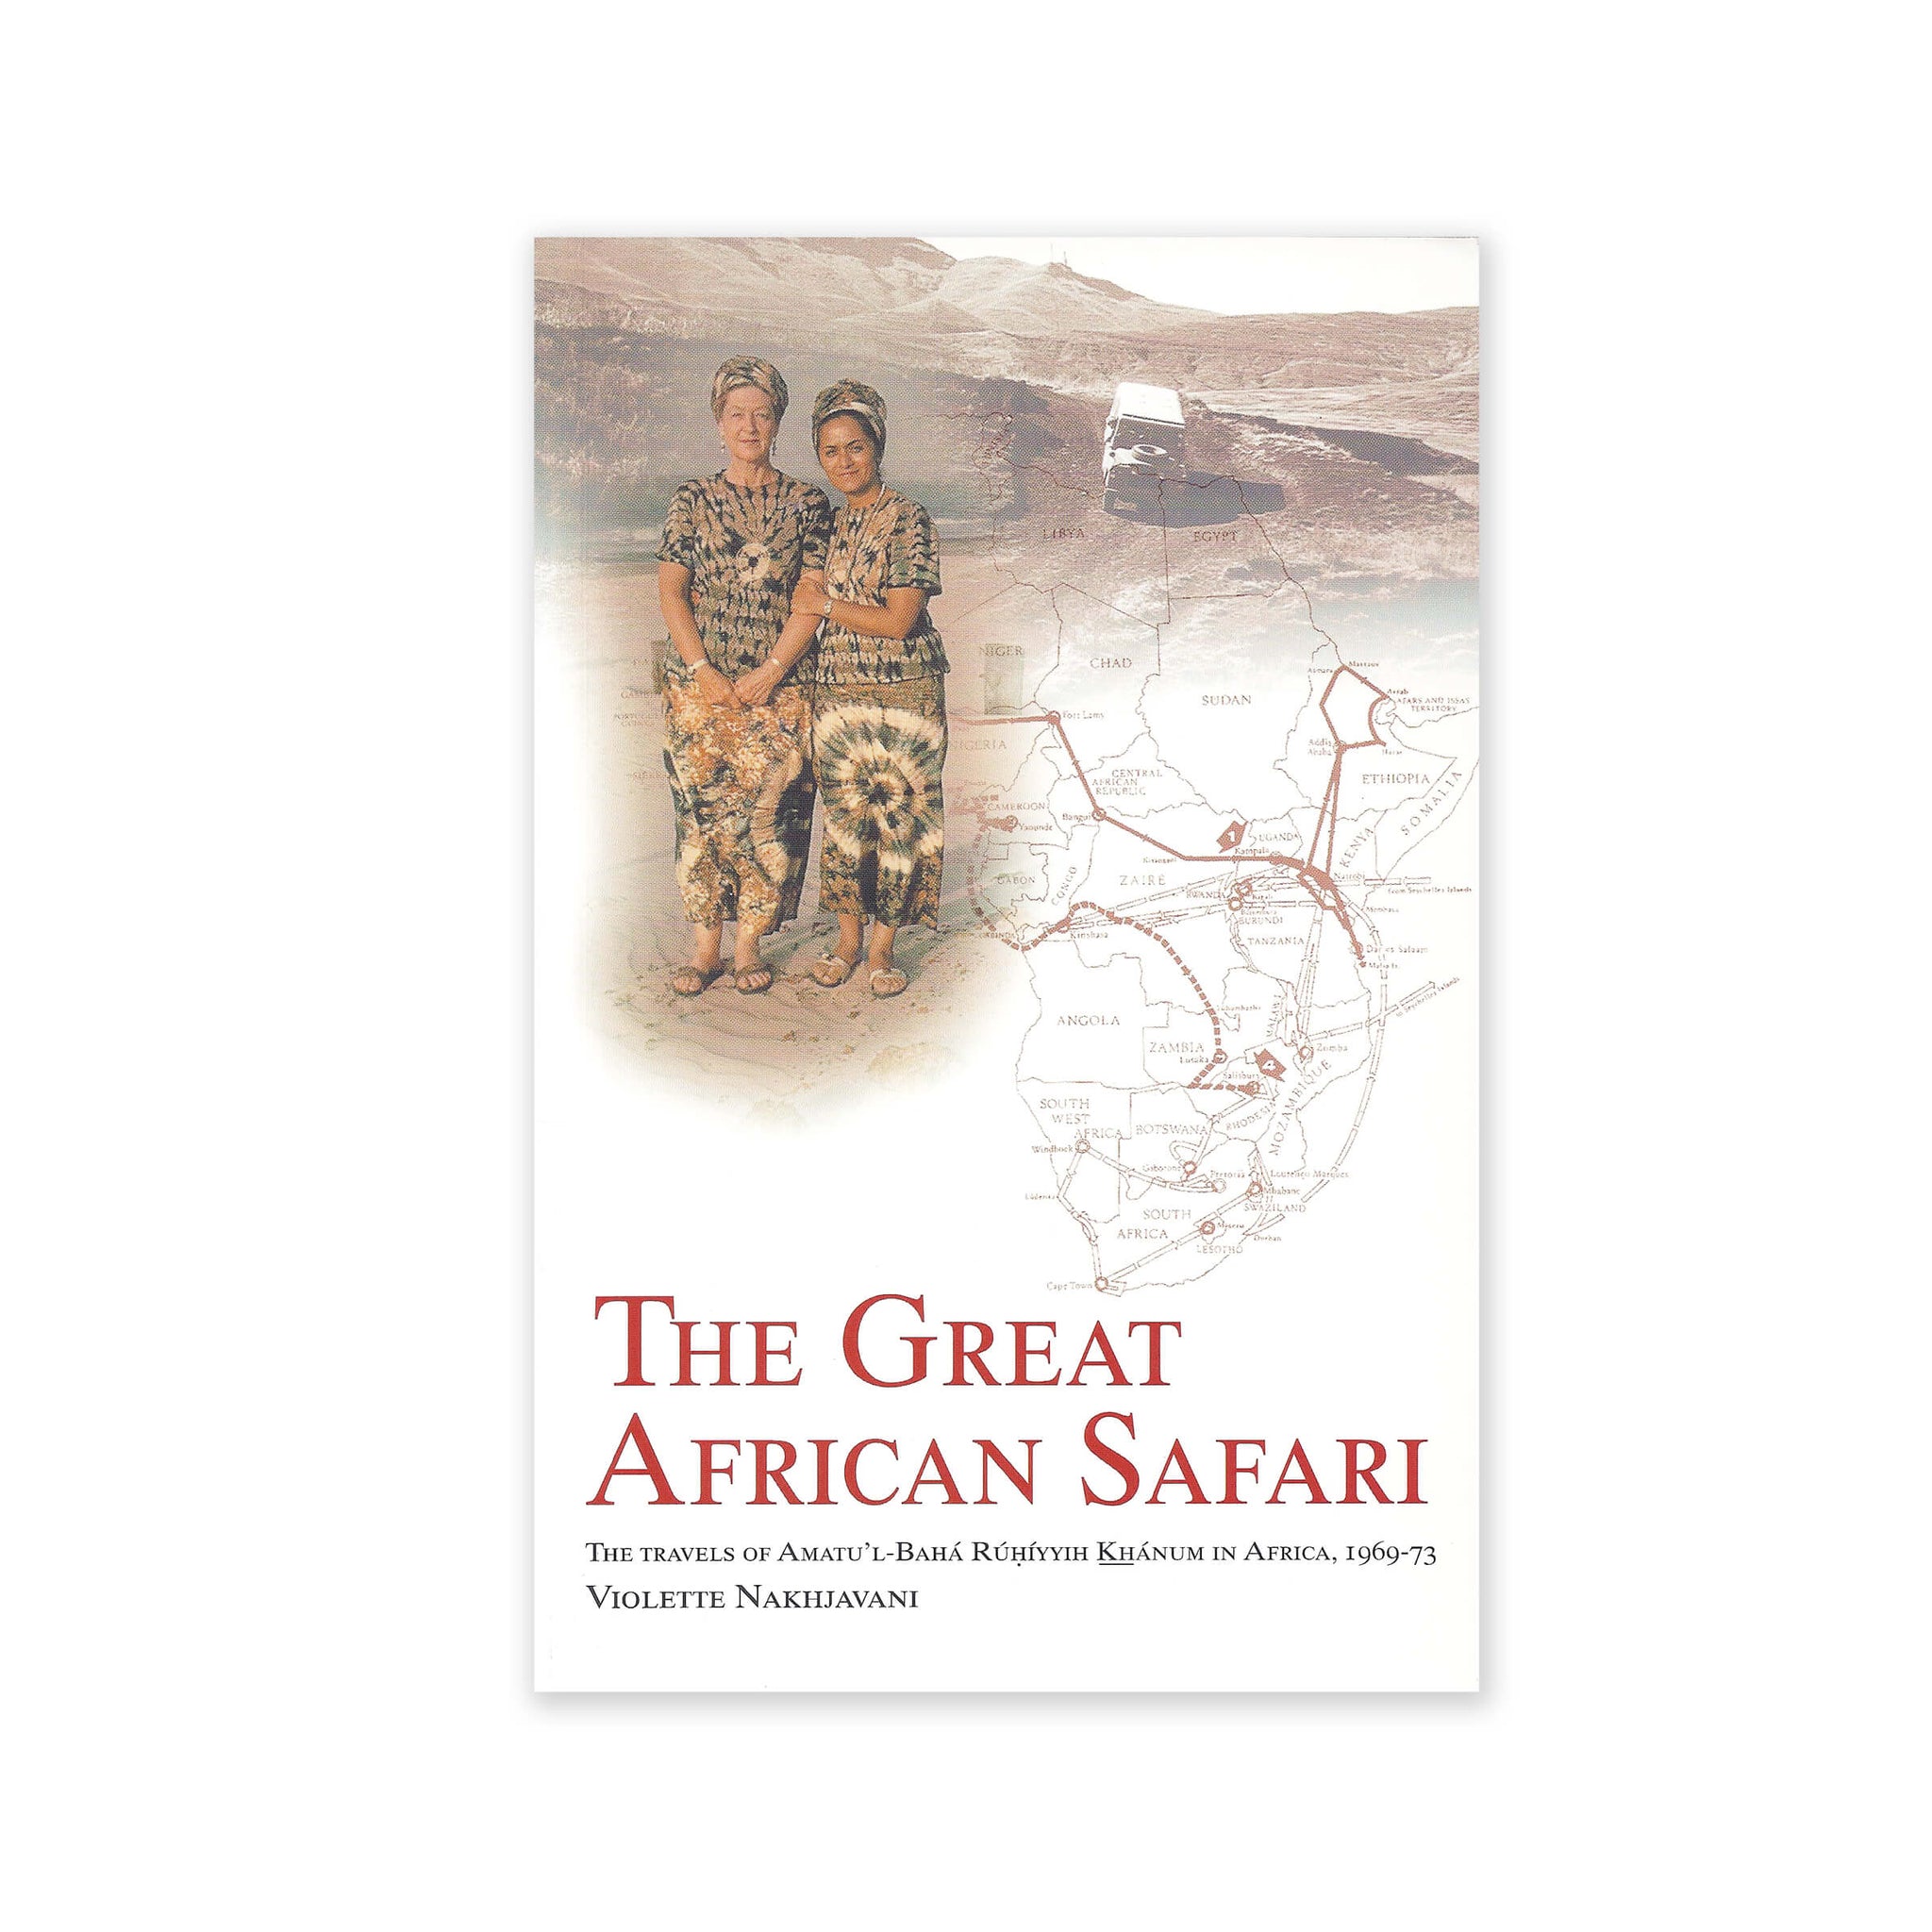 Great African Safari - The travels of Ruhiyyih Khanum in Africa, 1969-73